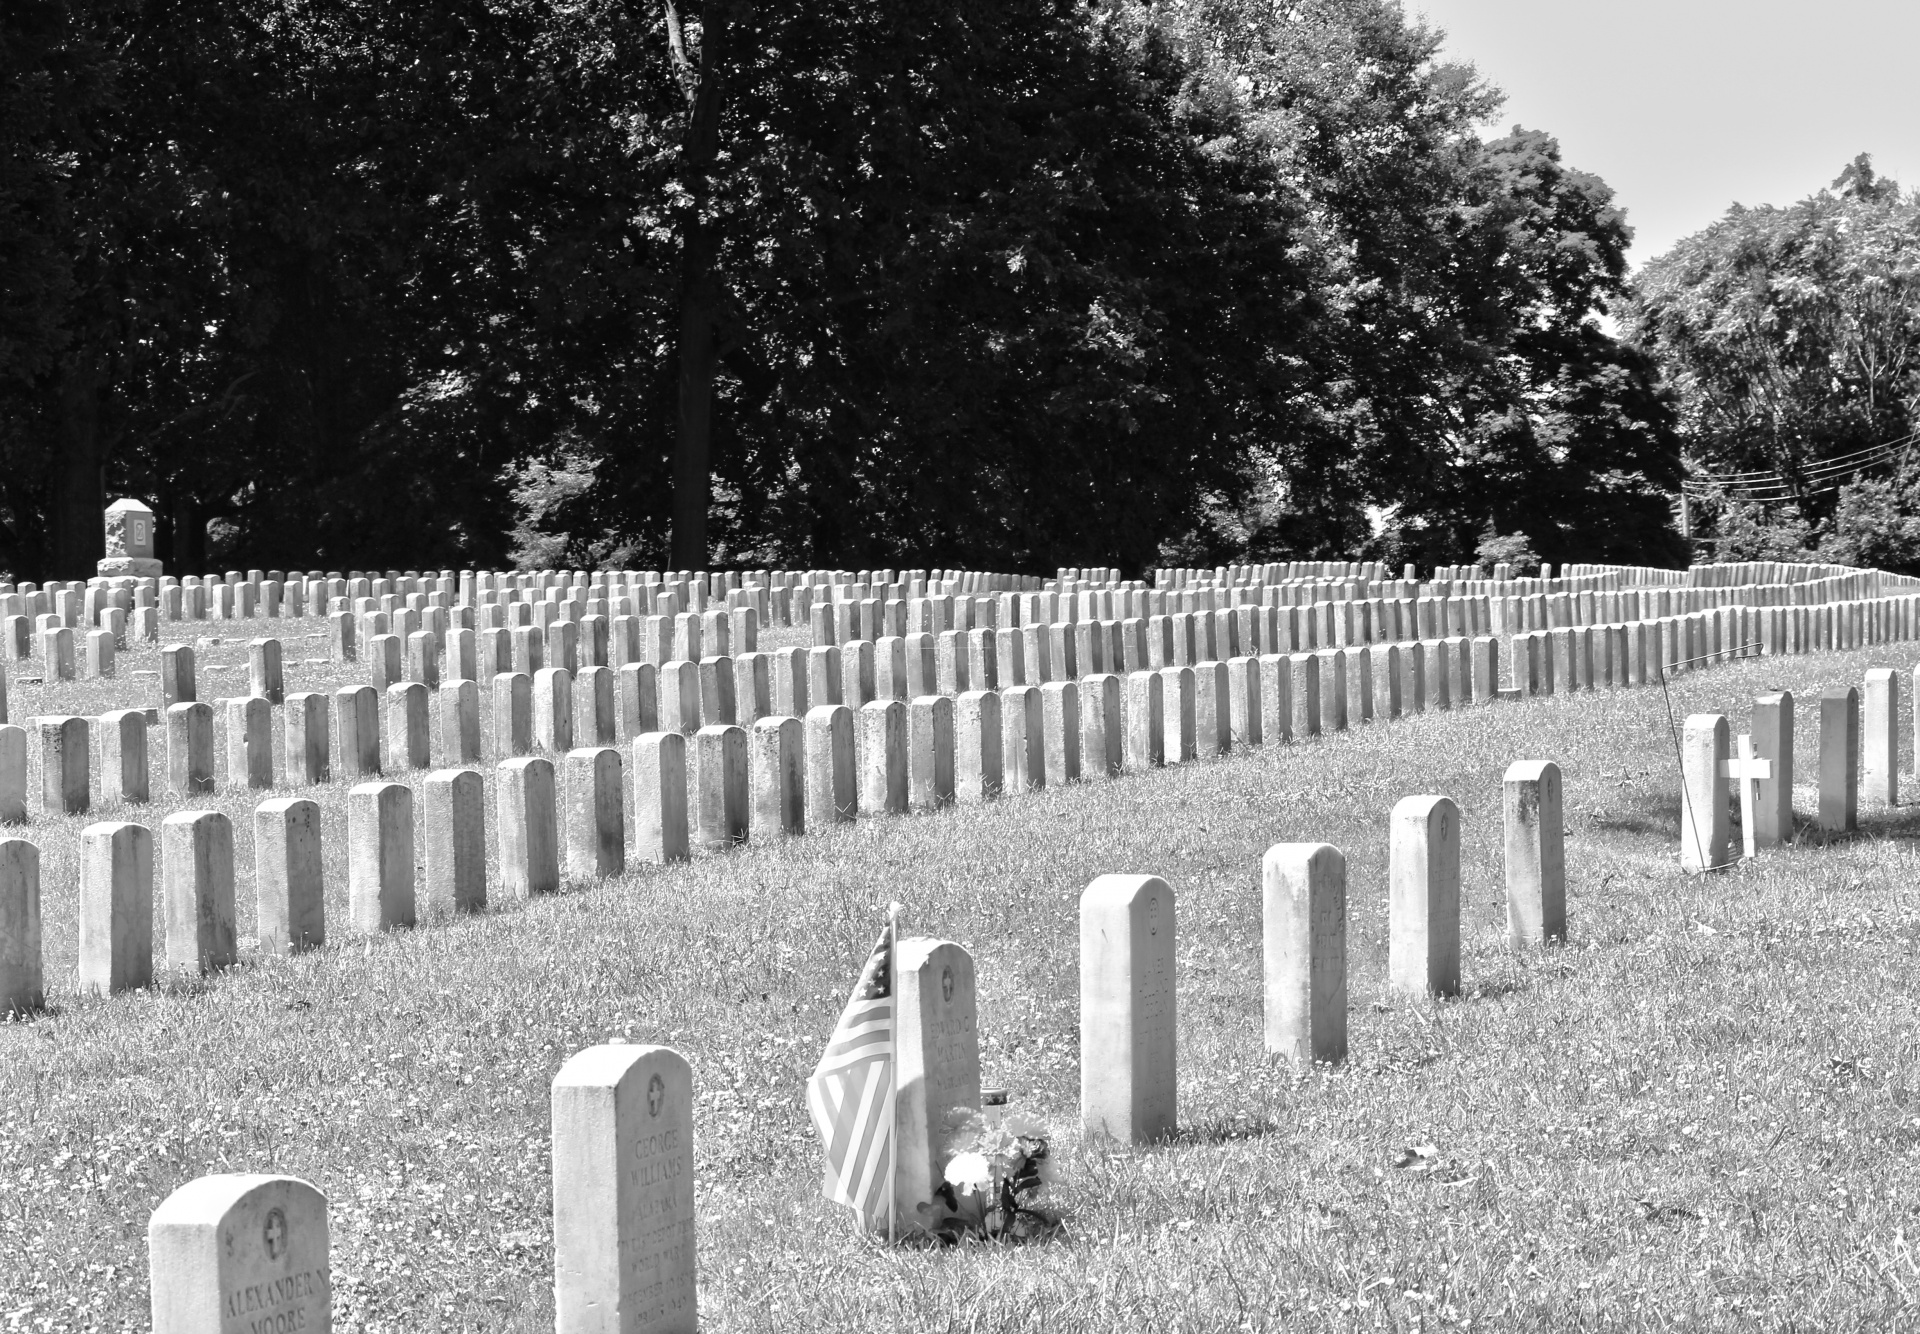 Monotone shot of the rows of headstones at Antietam Battlefield in Sharpsburg, Maryland